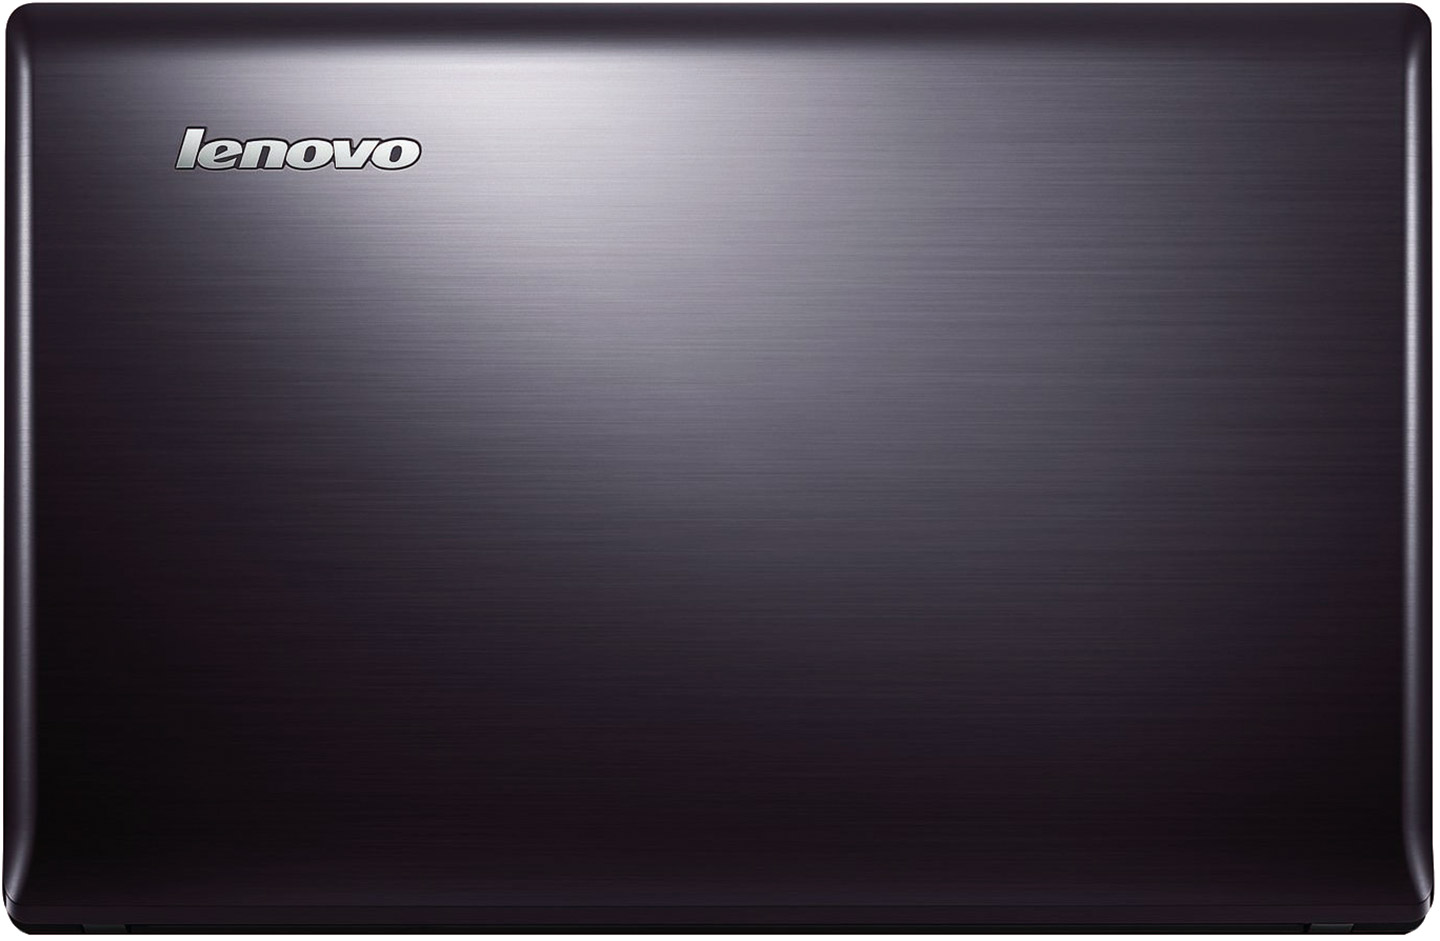 Размер ноутбука леново. Ноутбук Lenovo IDEAPAD g780. Lenovo IDEAPAD g580g. Ноутбук Lenovo g780 Intel Pentium. Ноутбук Lenovo IDEAPAD g780 (59-350014).